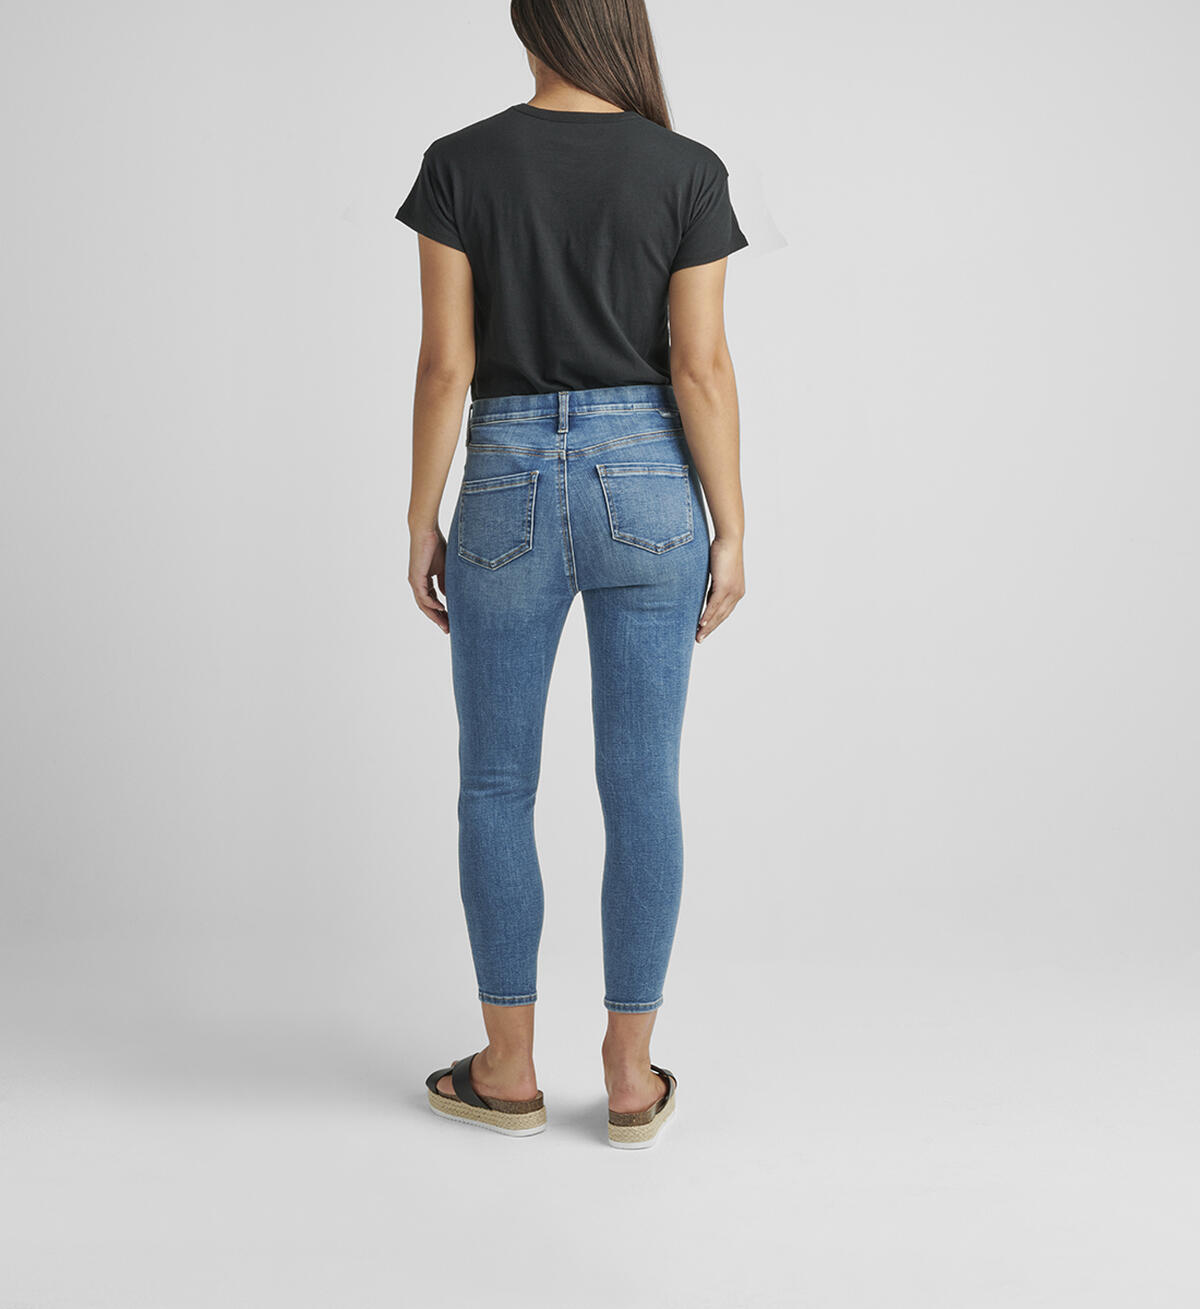 Valentina High Rise Skinny Crop Pull-On Jeans Petite, , hi-res image number 1